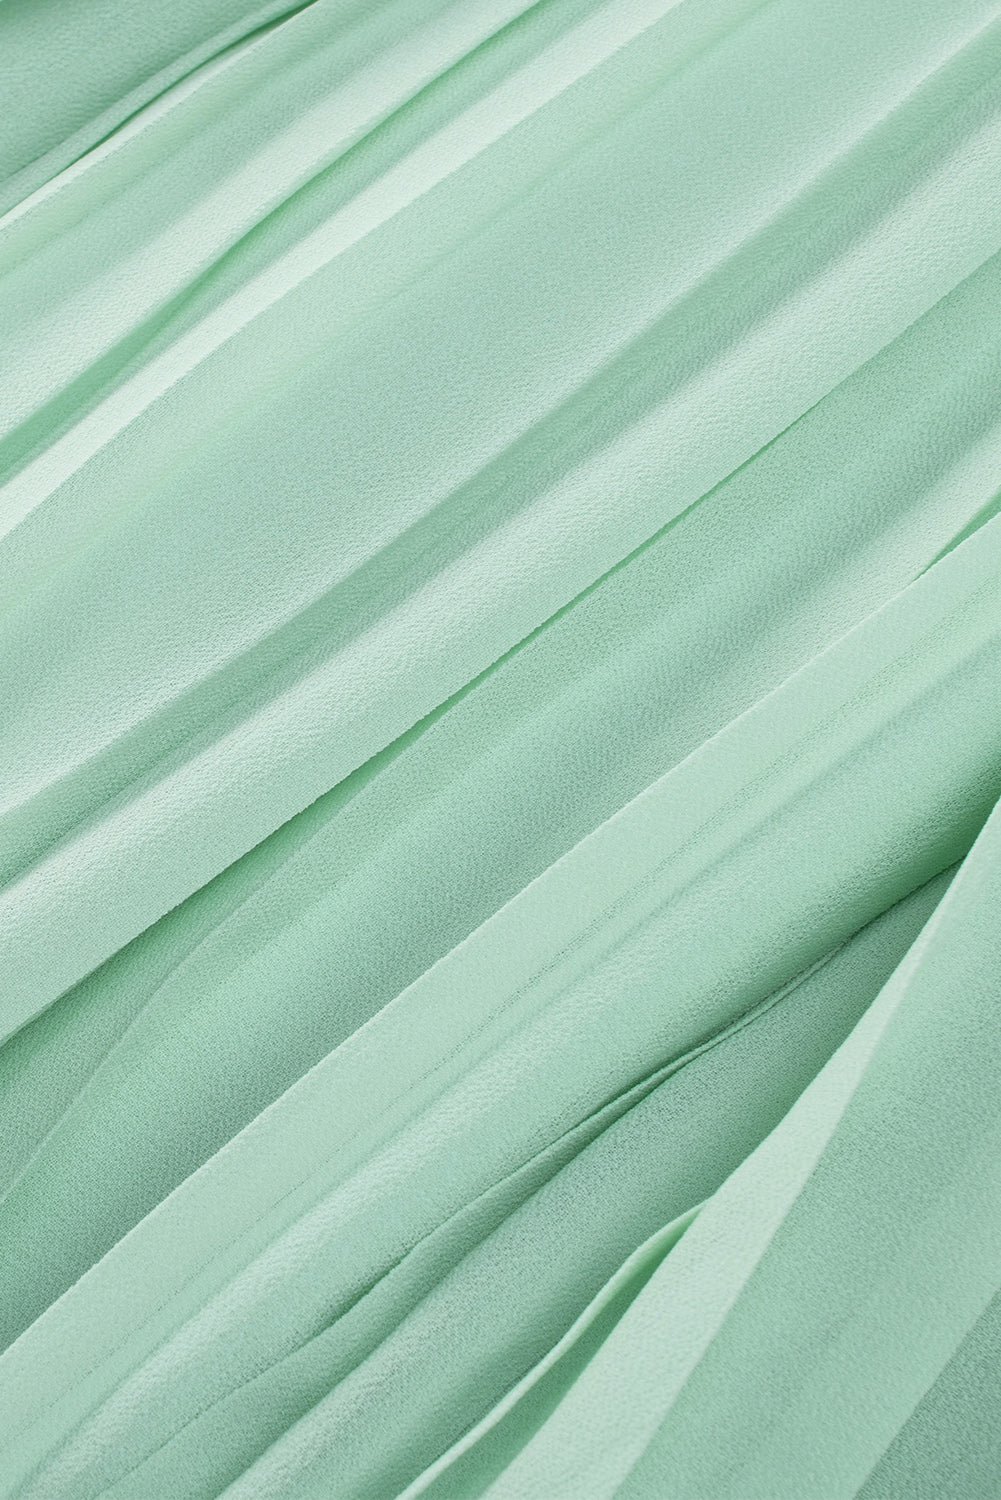 Zeleni plisirani kombinezoni z naborki in gumbi za zavezovanje v izrezu